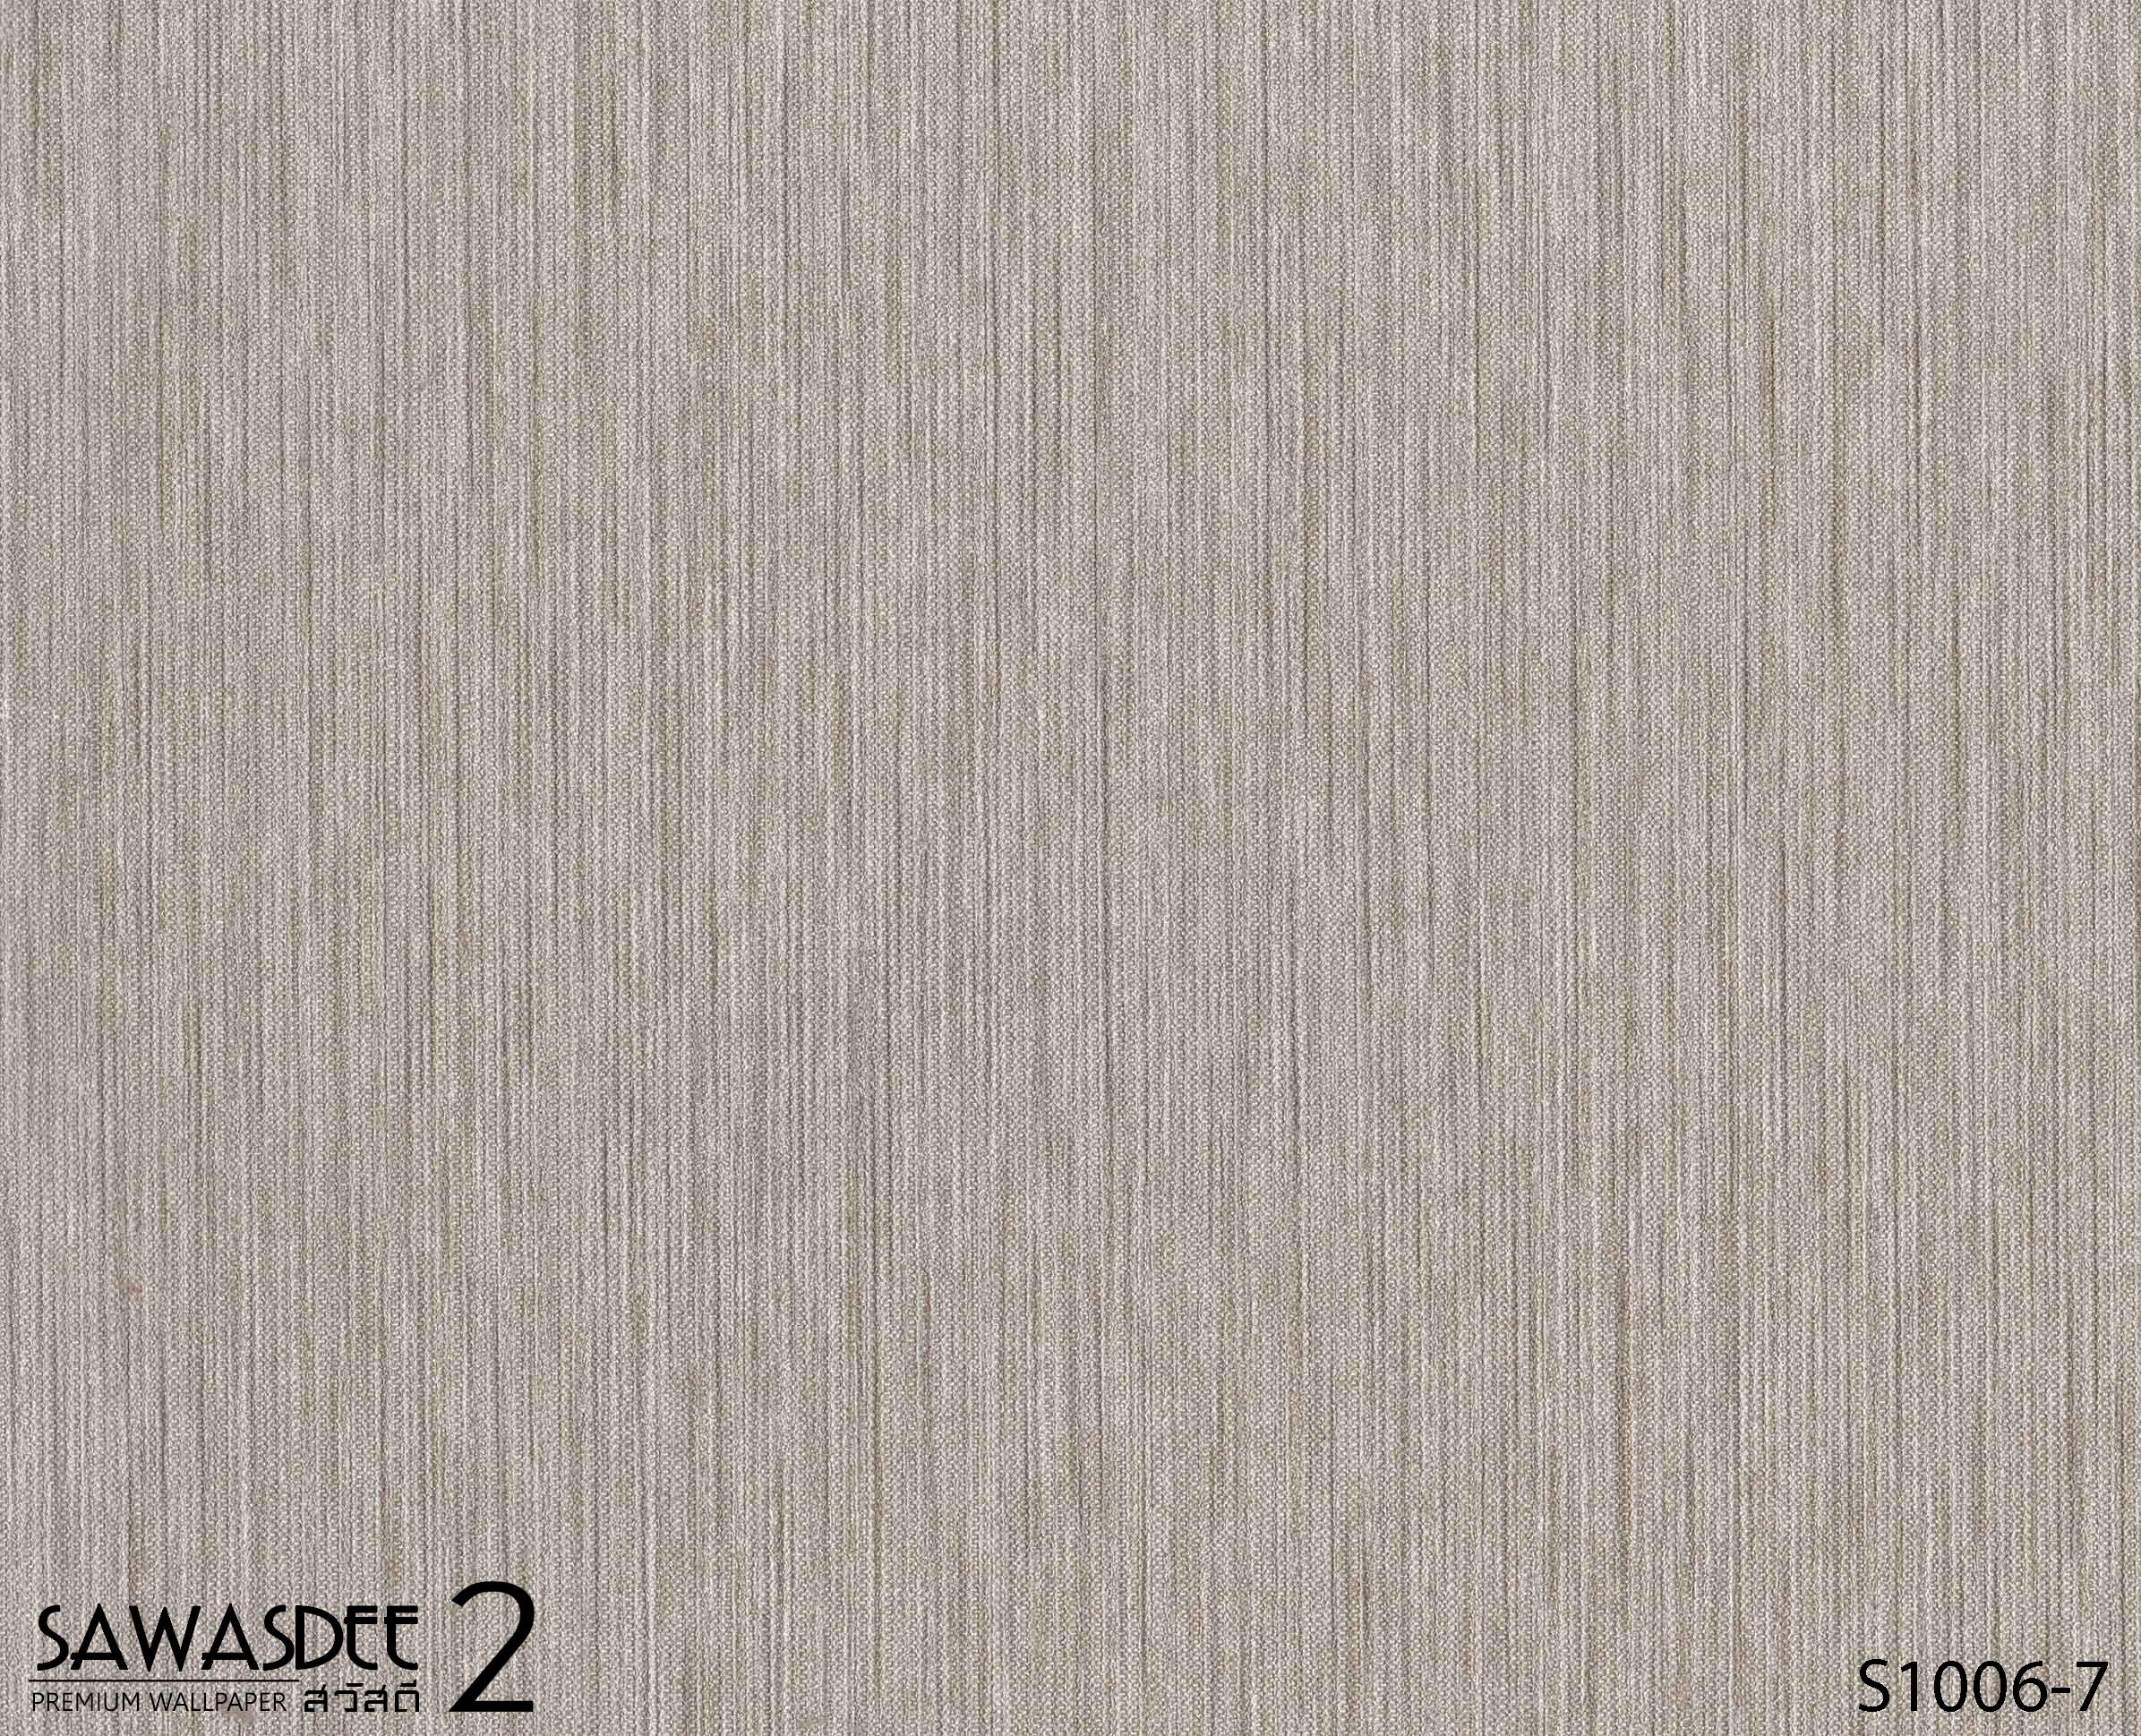 Wallpaper (SAWASDEE 2) S1006-7